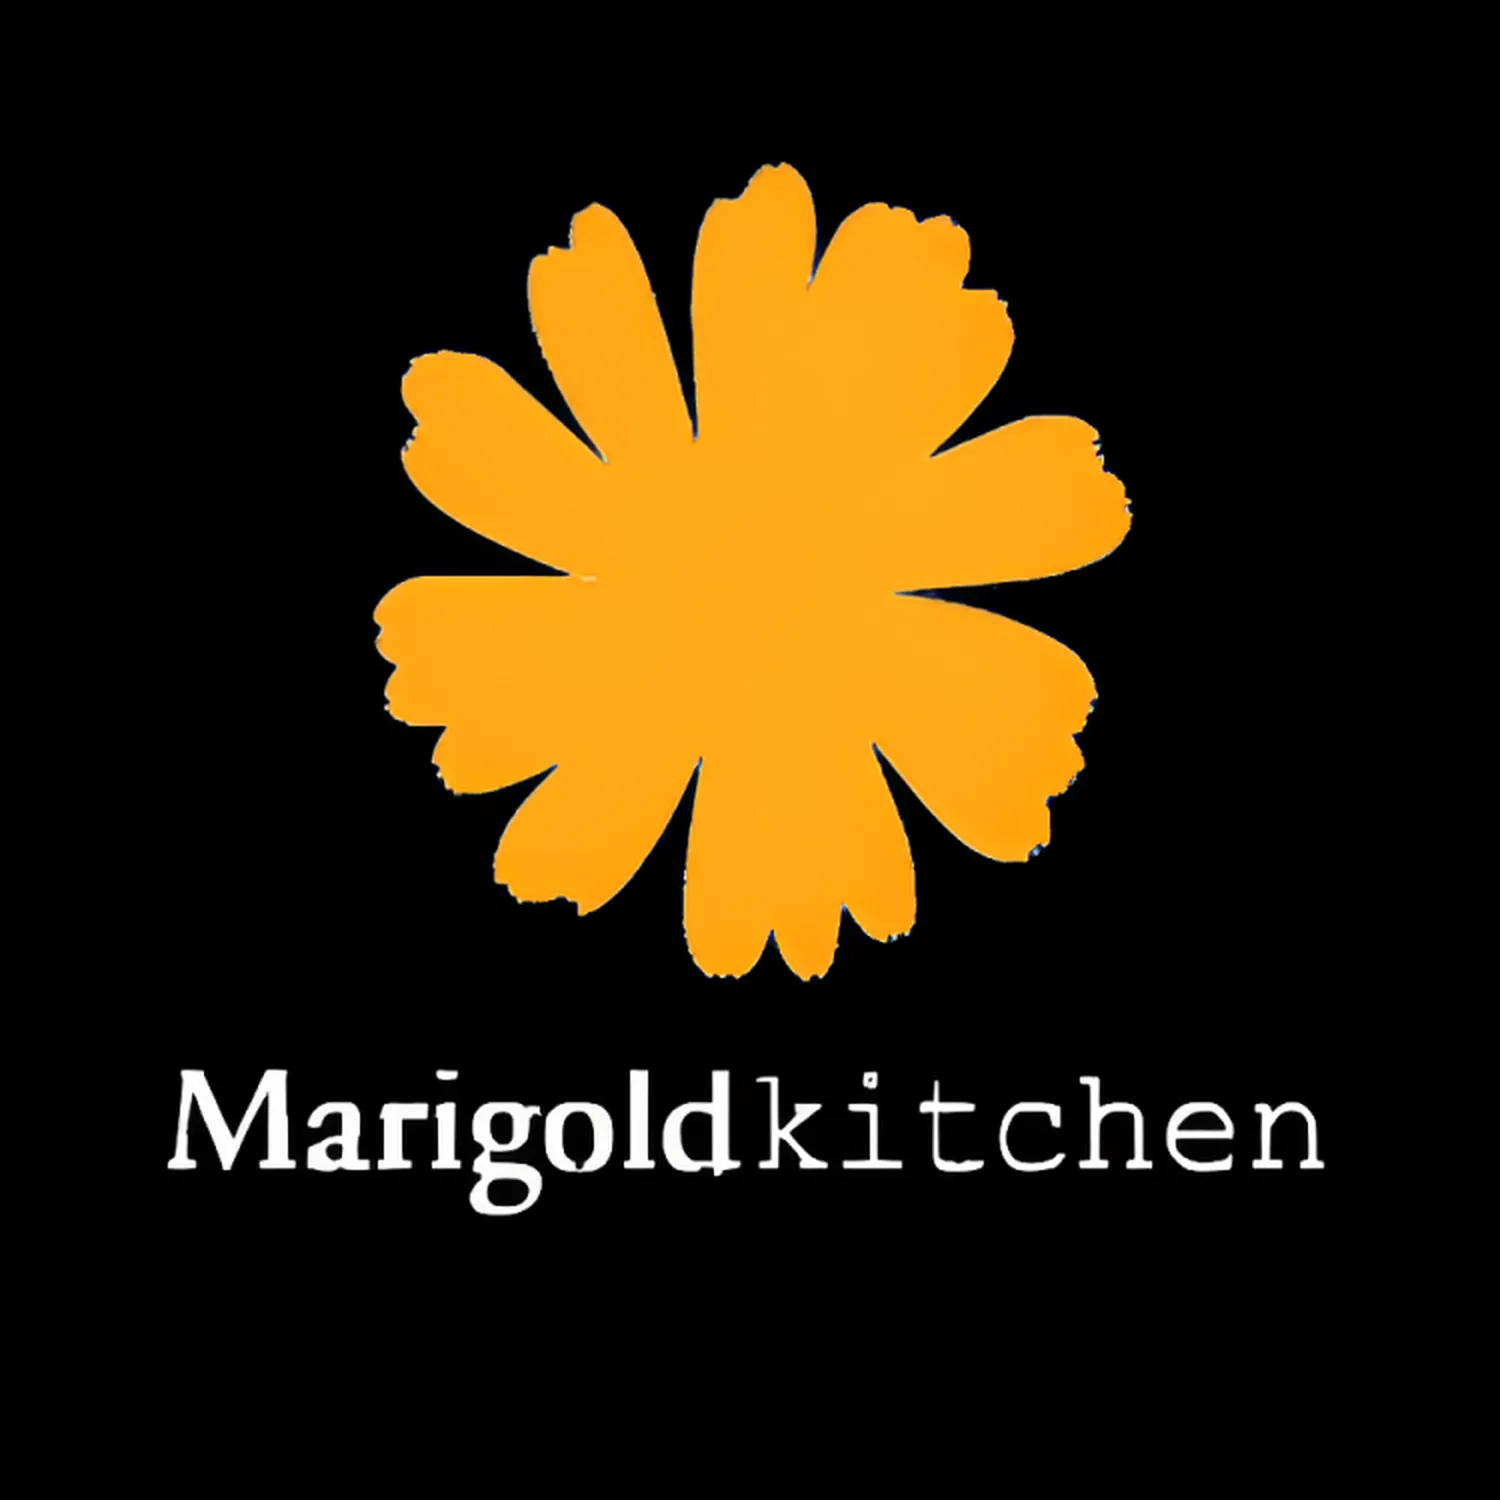 Marigold Kitchen Restaurant Philadelphia Theworldkeys.webp